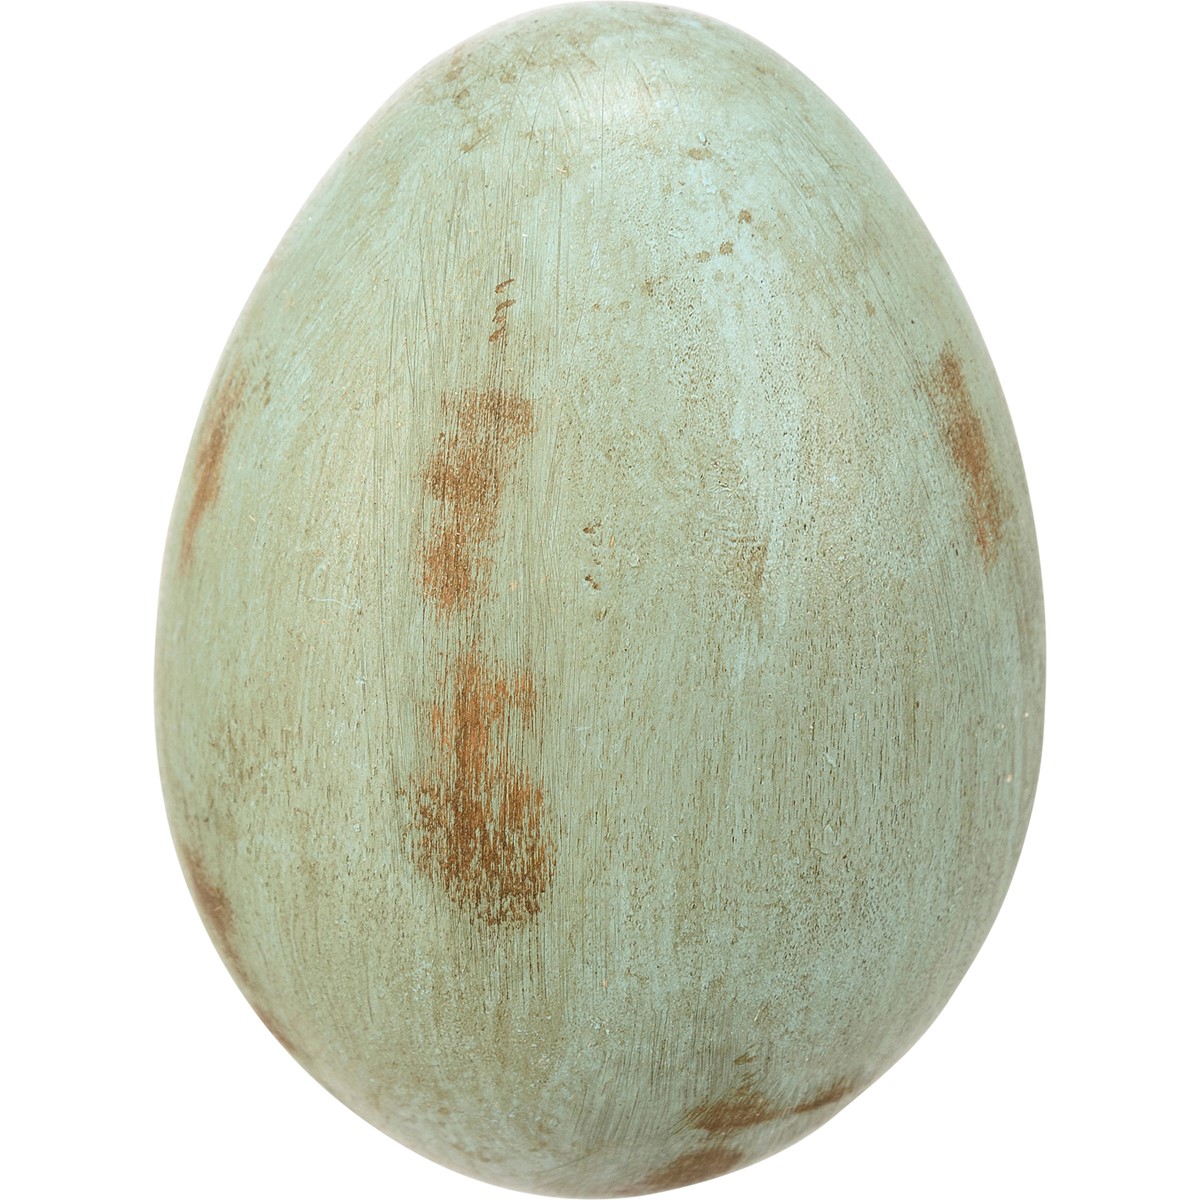 Primitive Wooden Eggs - Wood